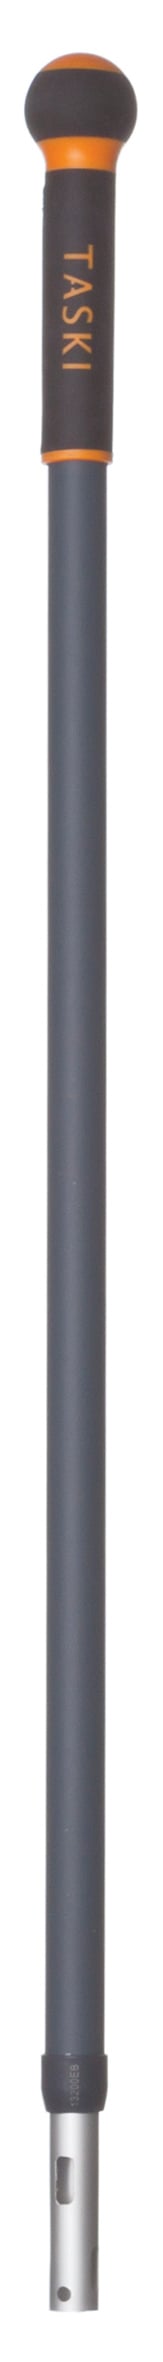 Skaft Taski Ultra Plus Teleskop 100-170cm 53100005_1